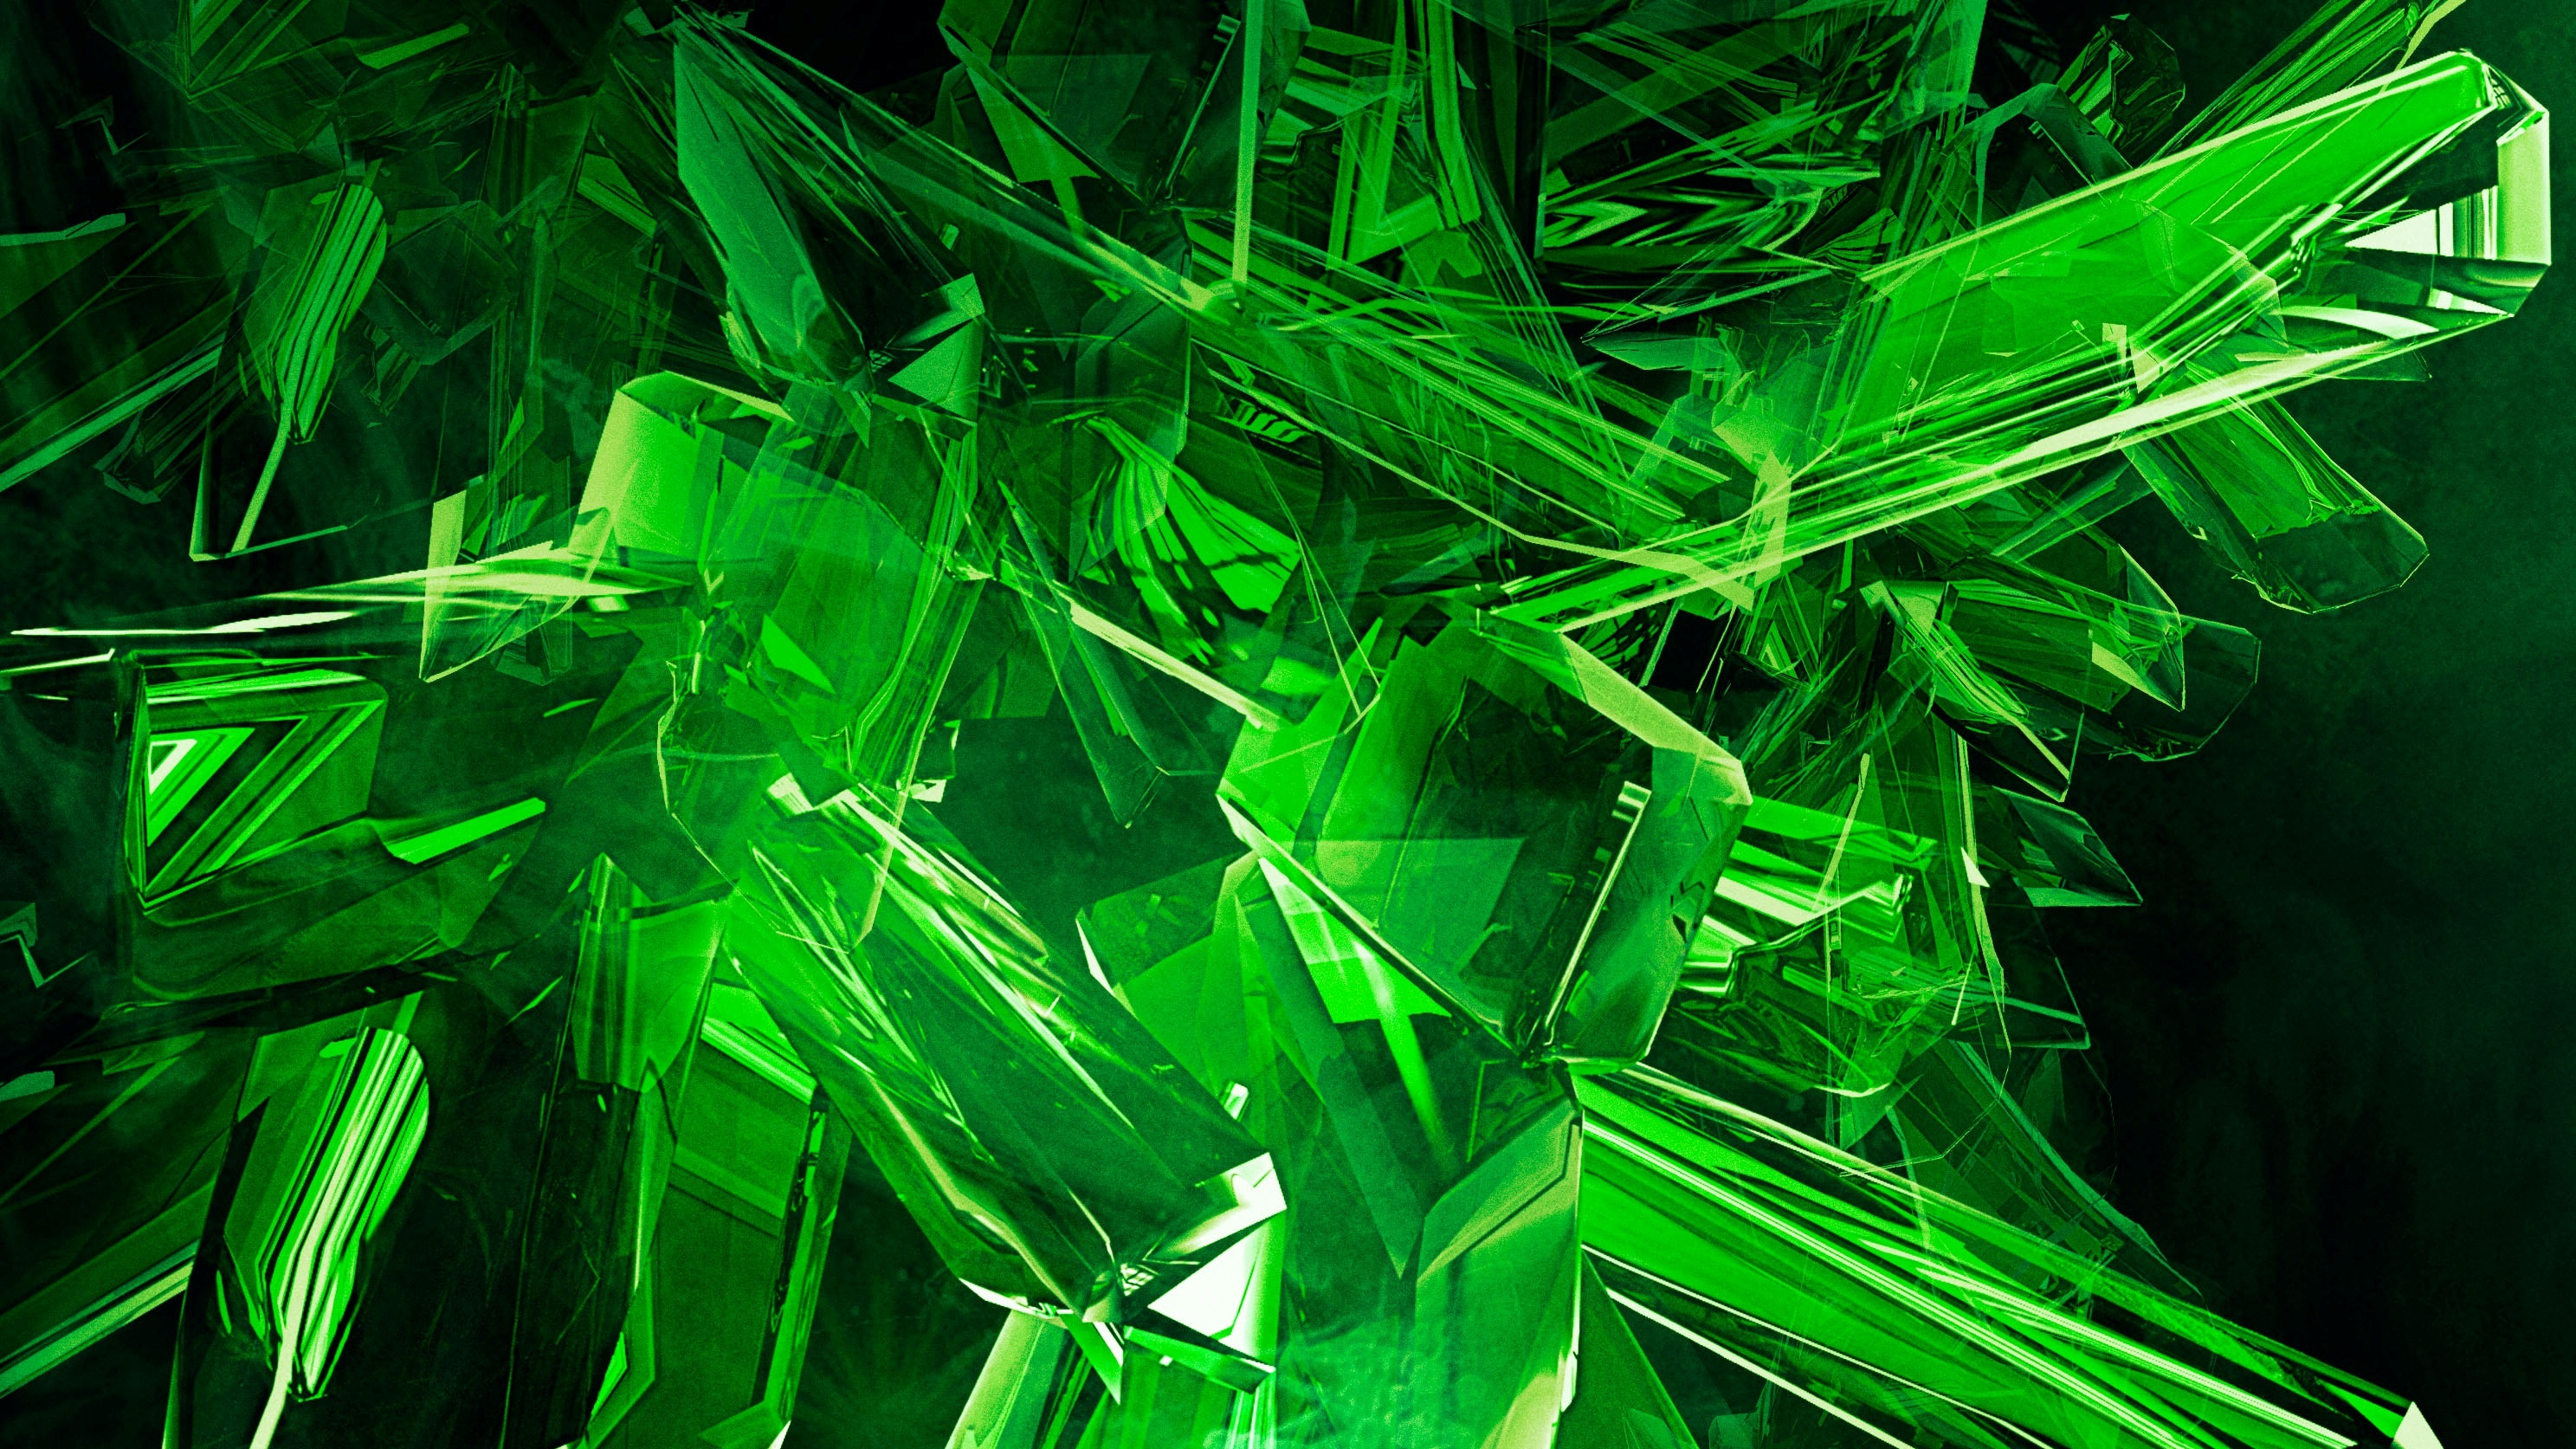 47+] Cool Green Abstract Wallpapers - WallpaperSafari